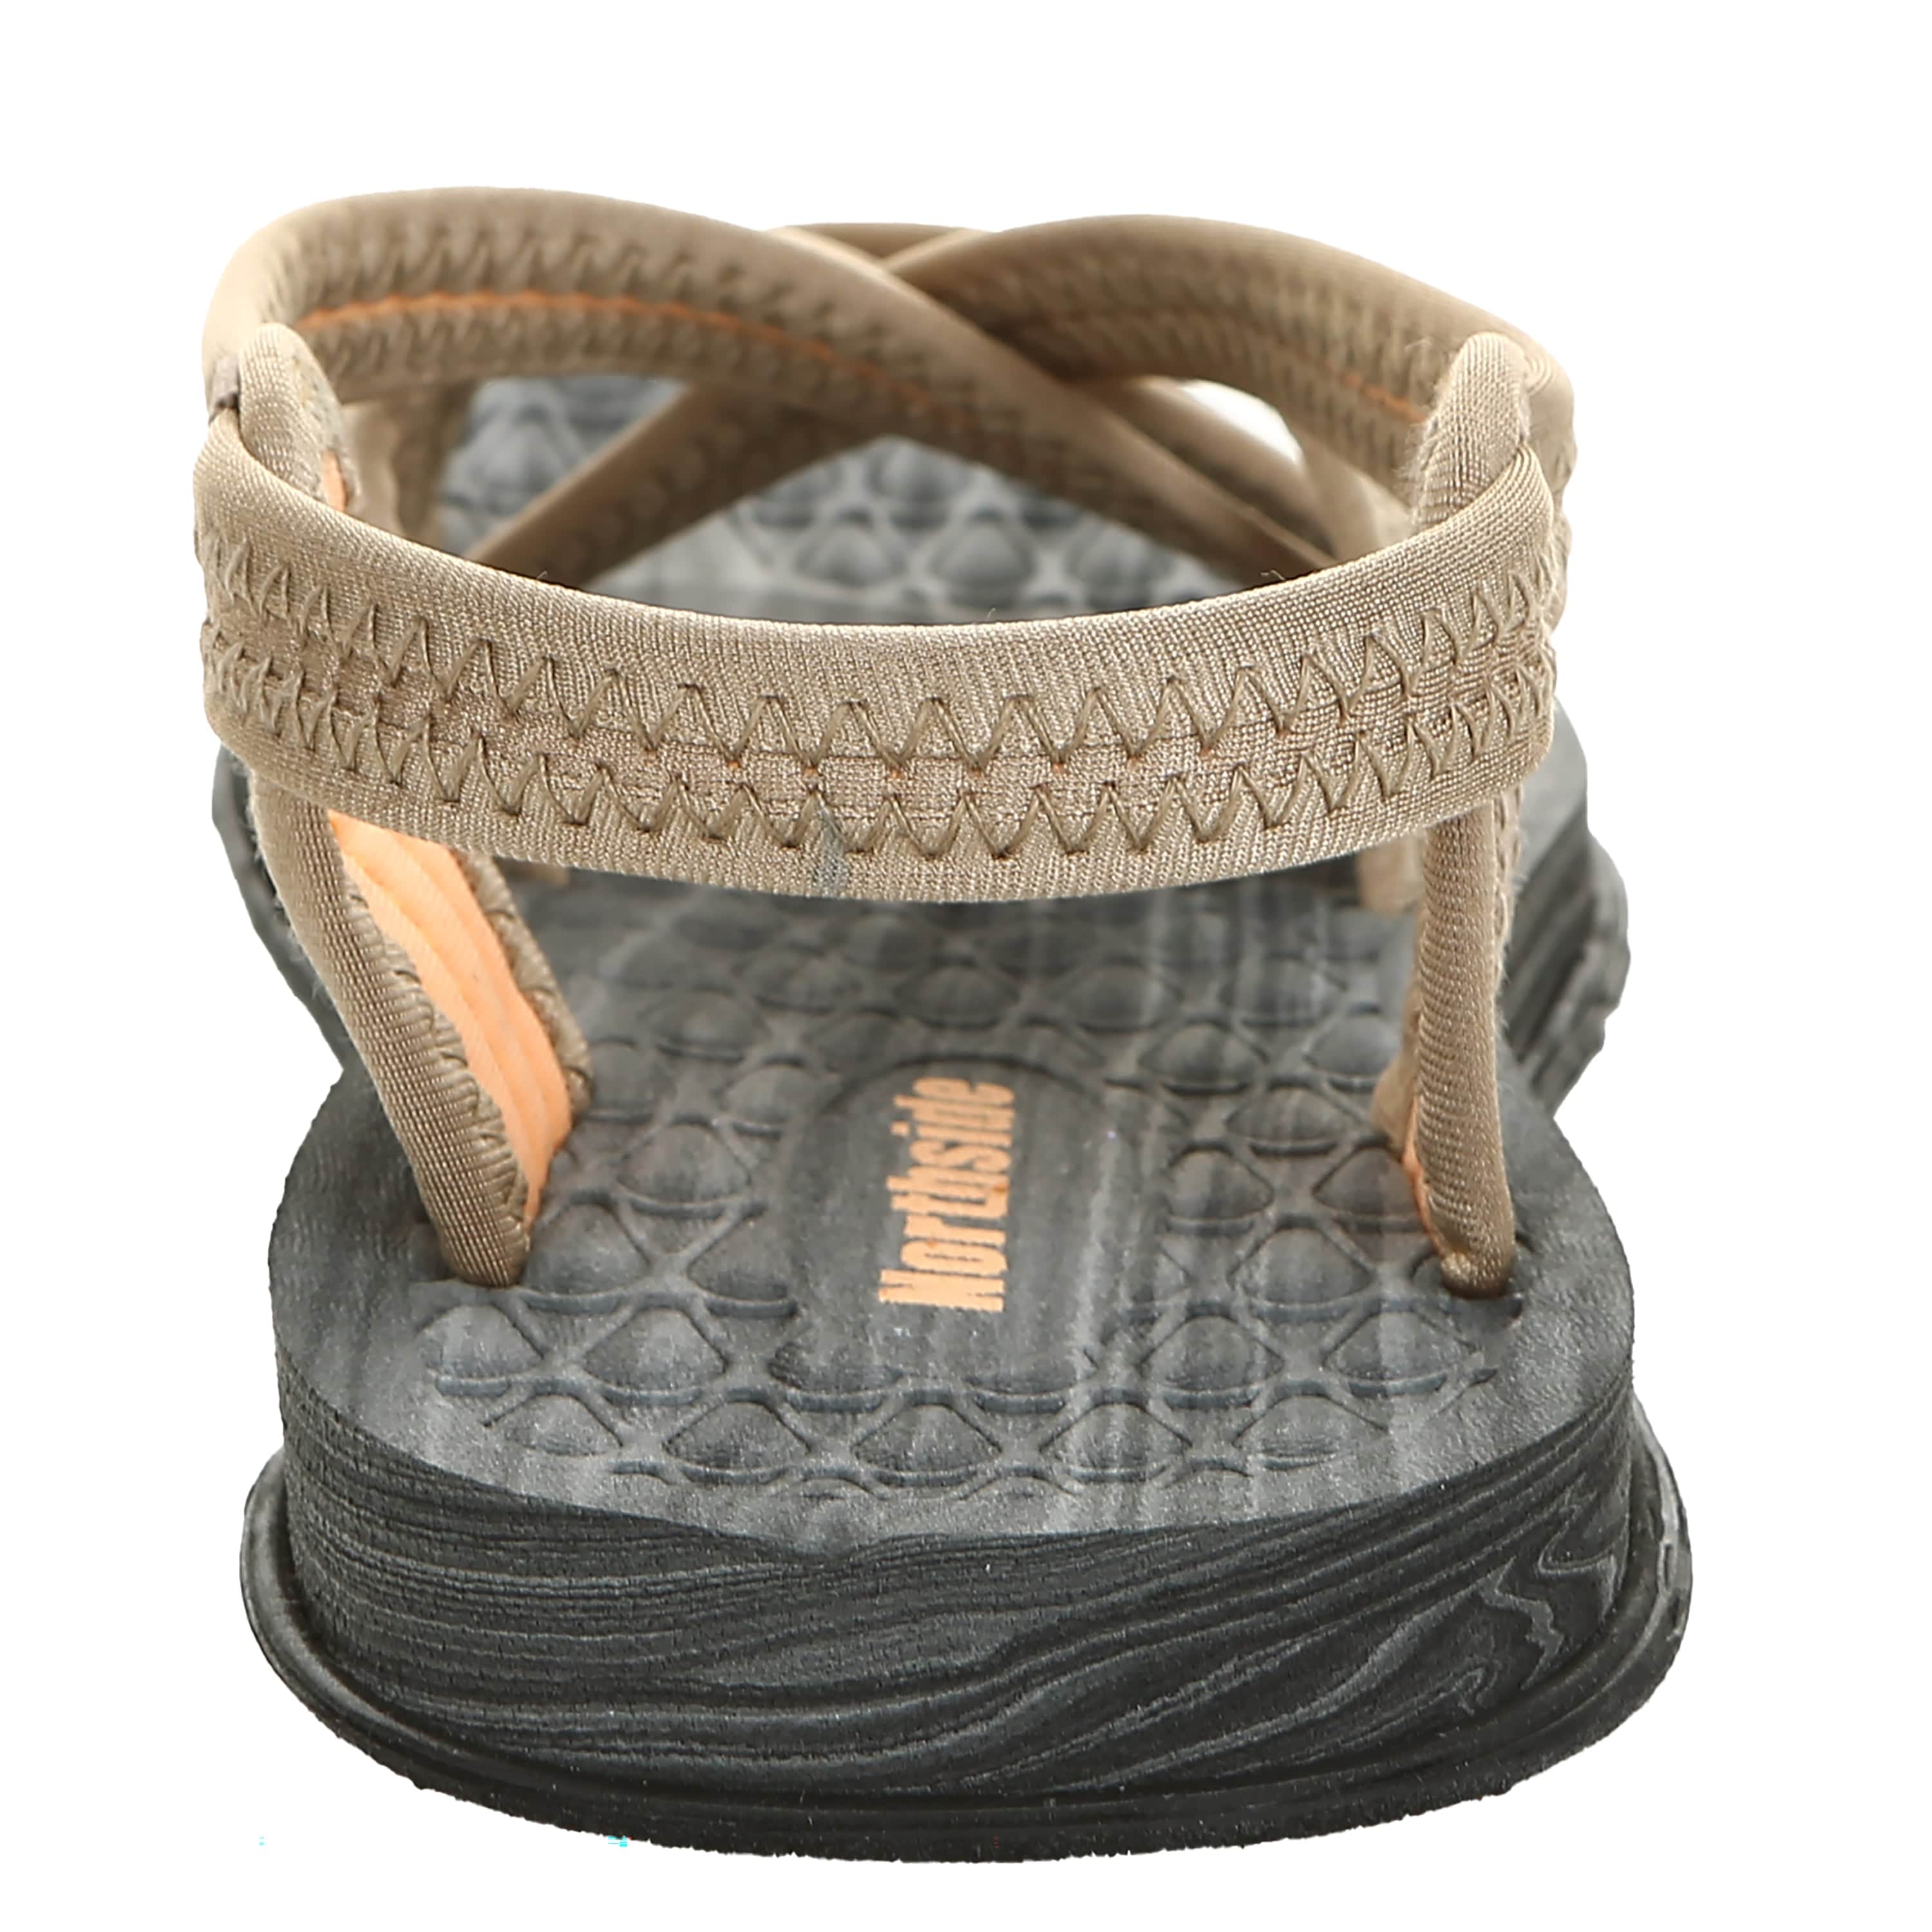 La sandalia deportiva Mori Comfort